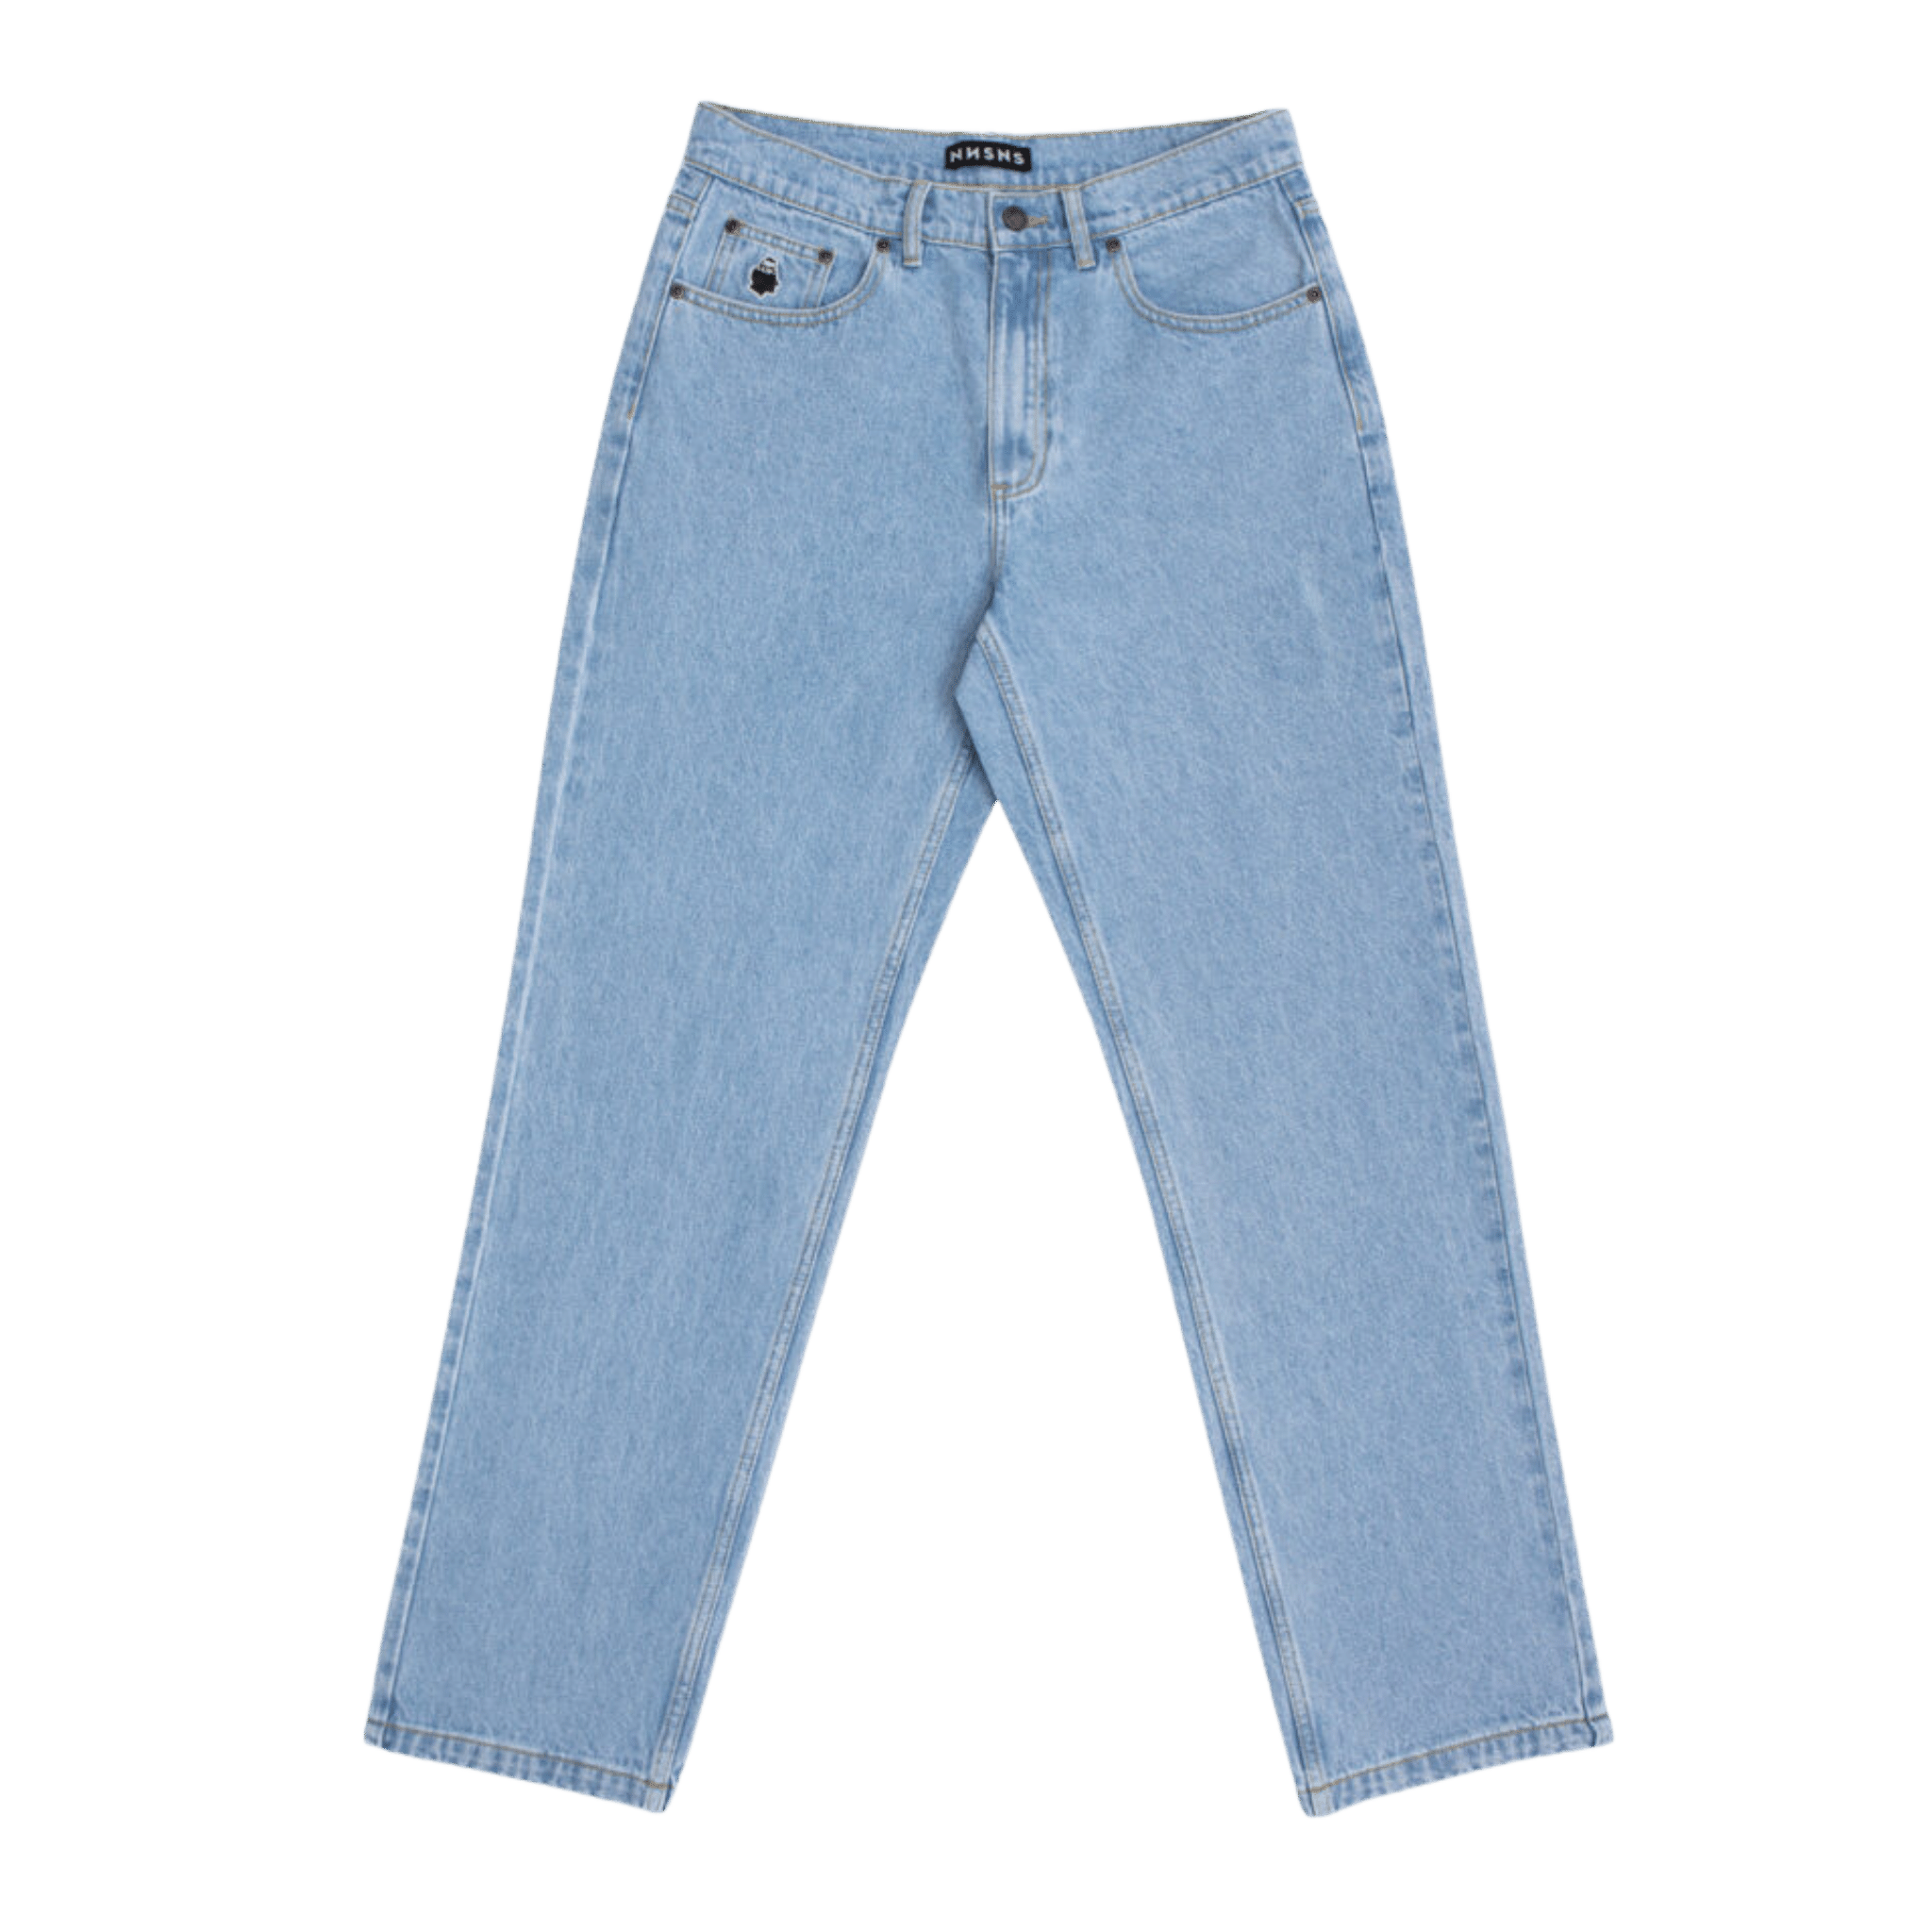 Nessie White Denim Jeans